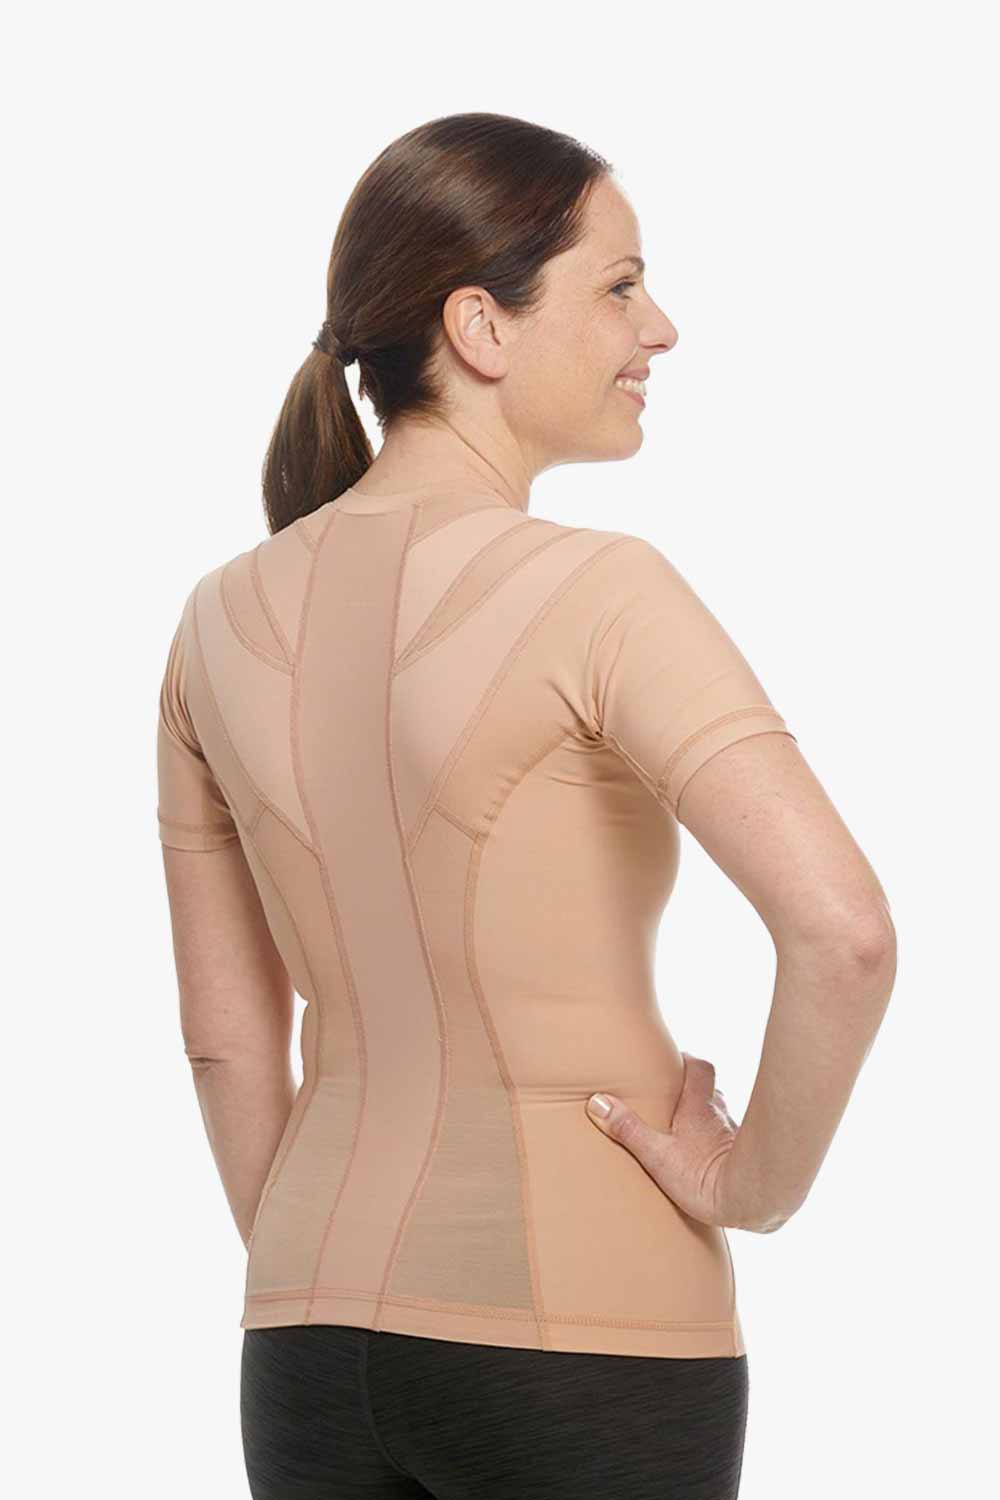 DEMO - Women's Posture Shirt™ - Nude